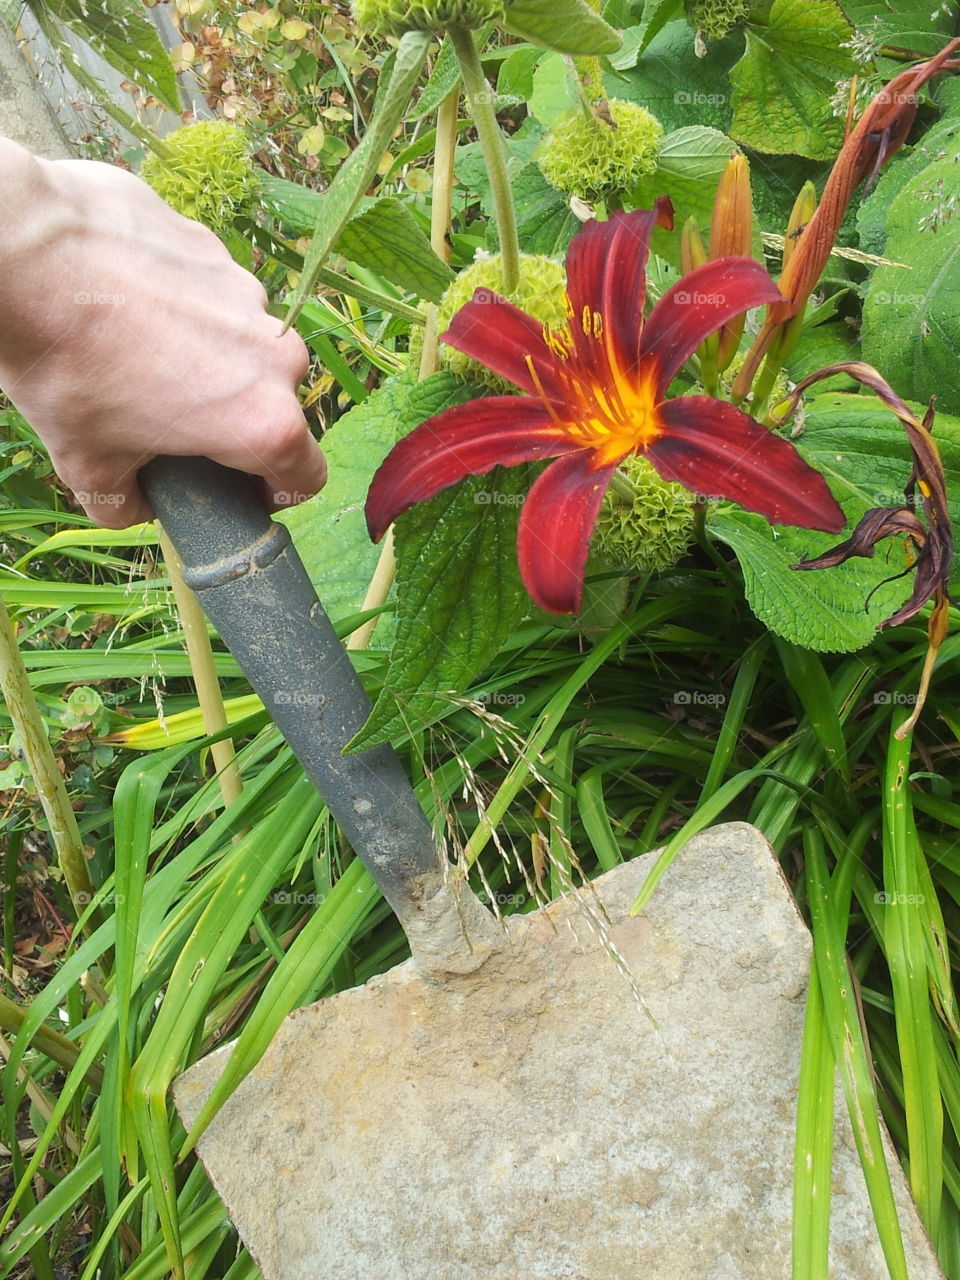 Gardening Close-ups